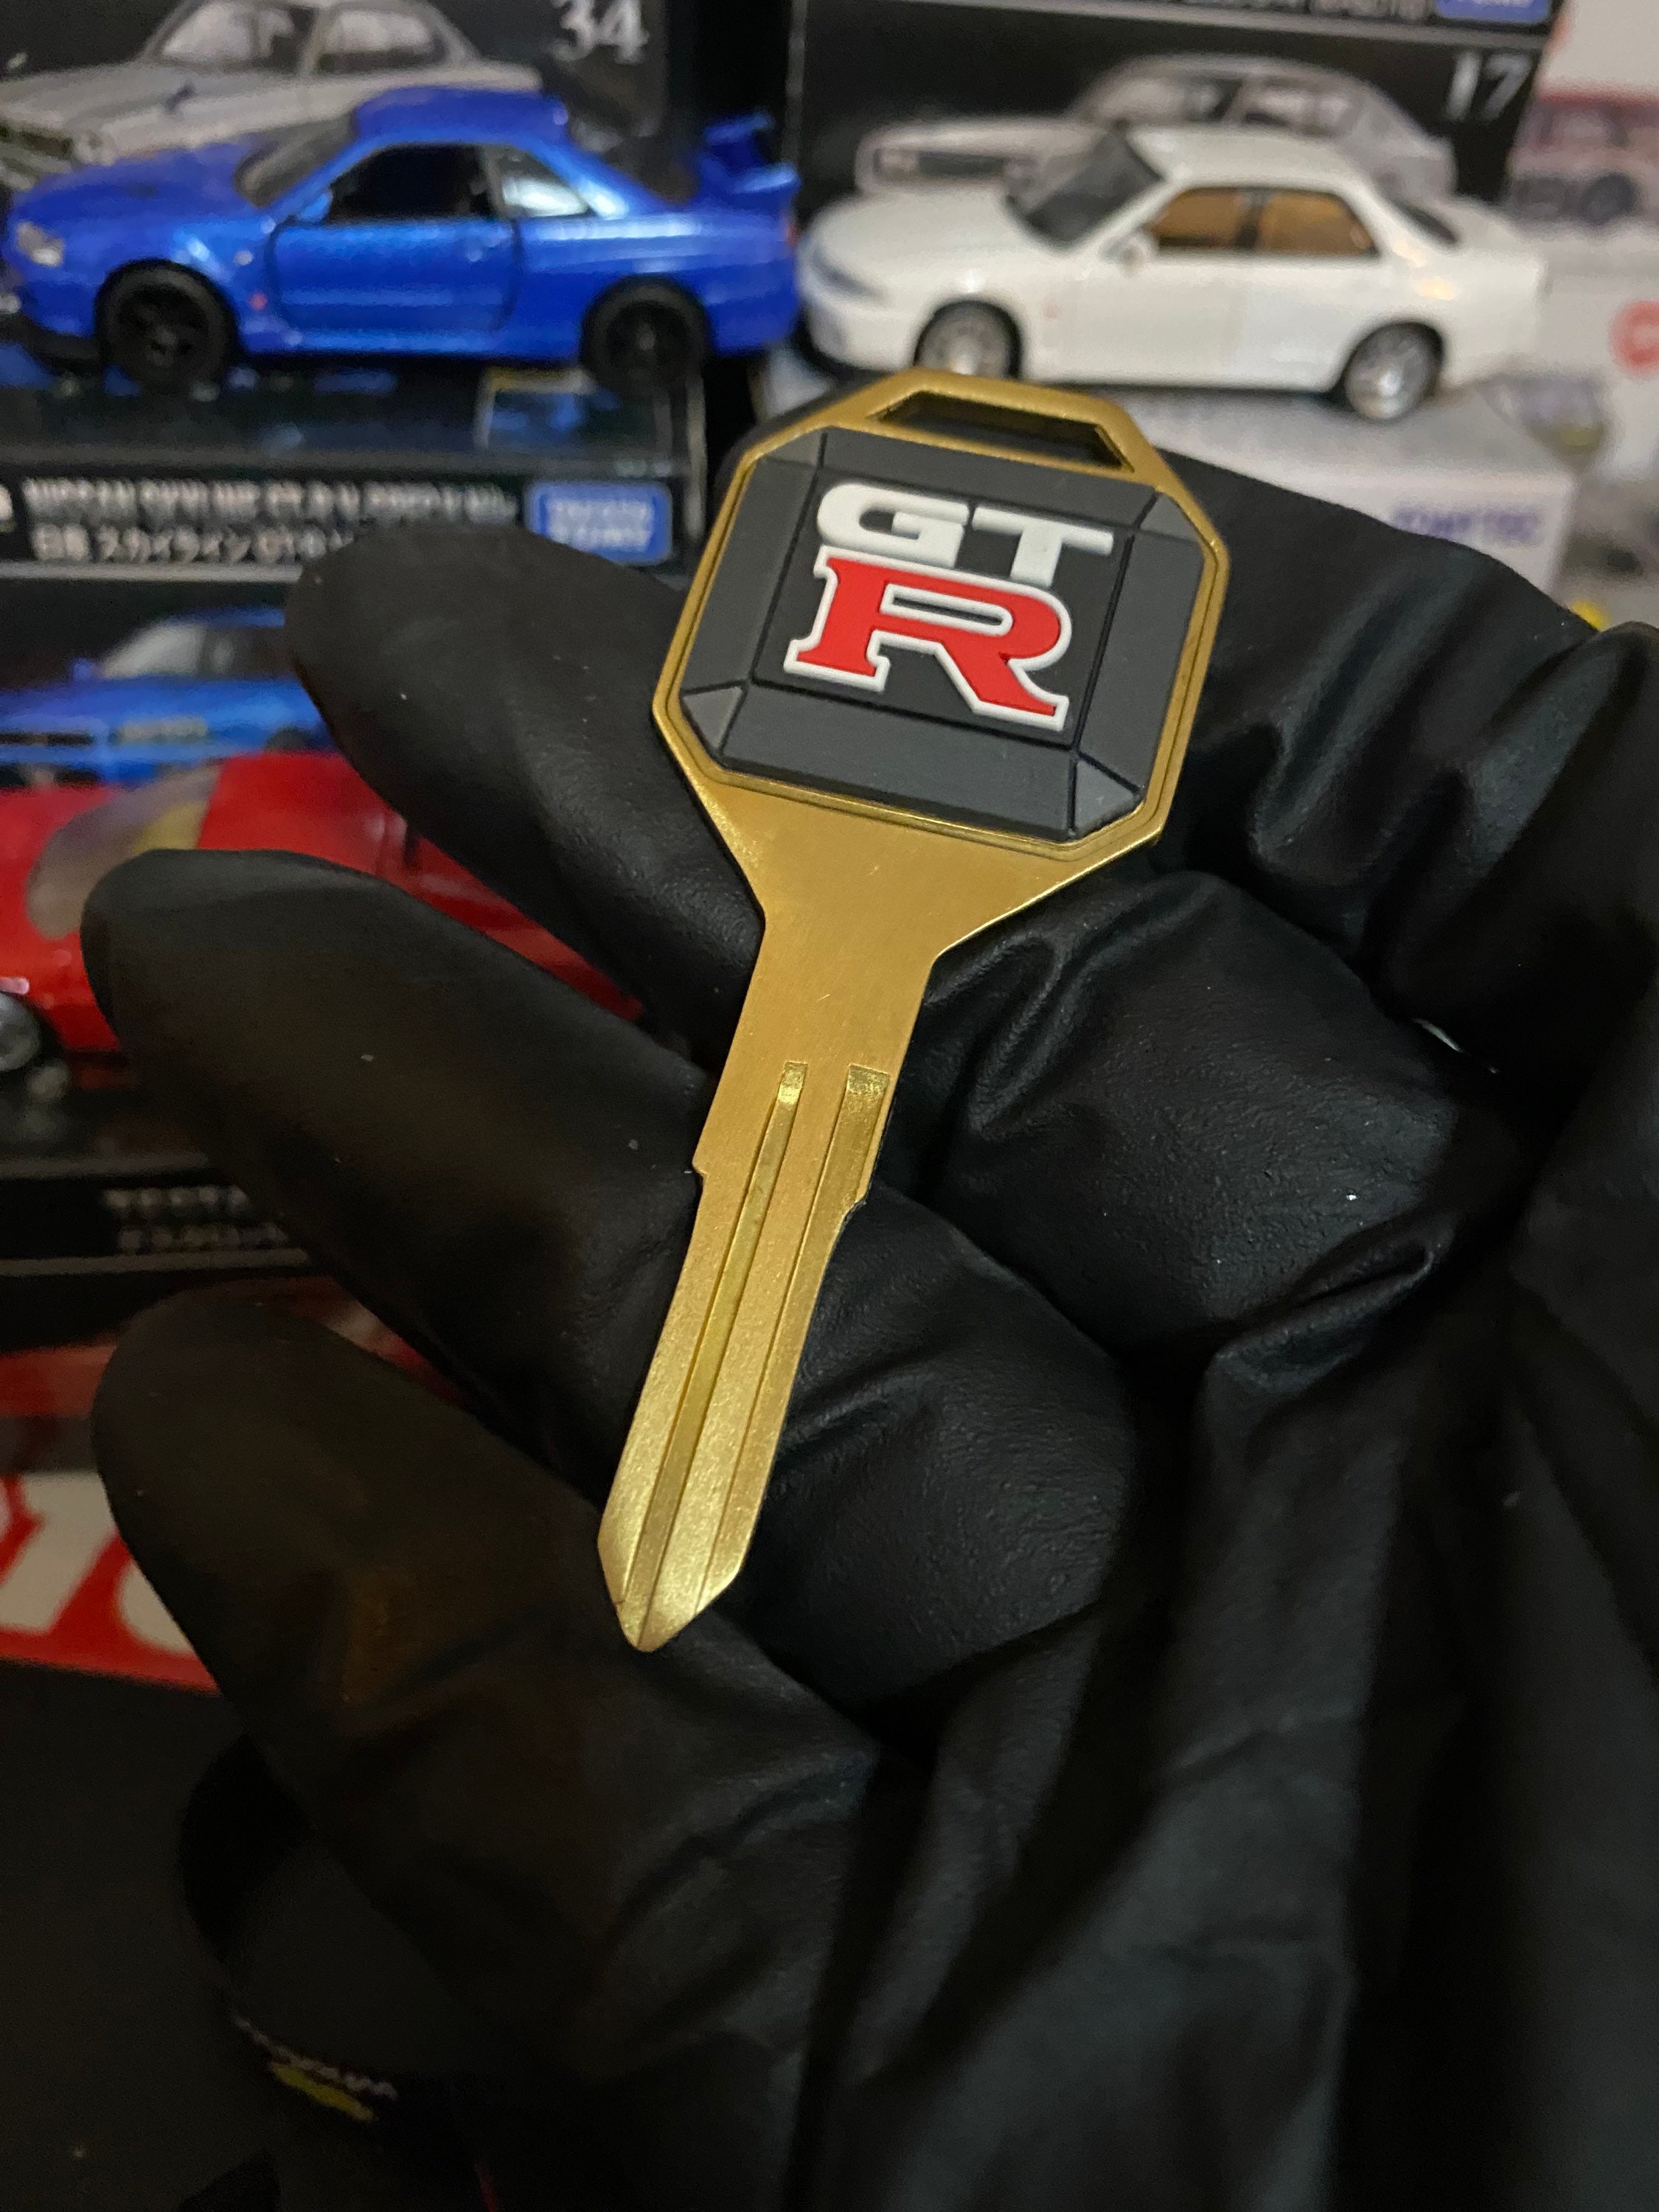 Nissan Skyline GT-R s and GTR Information : Real Keys or Fake Keys